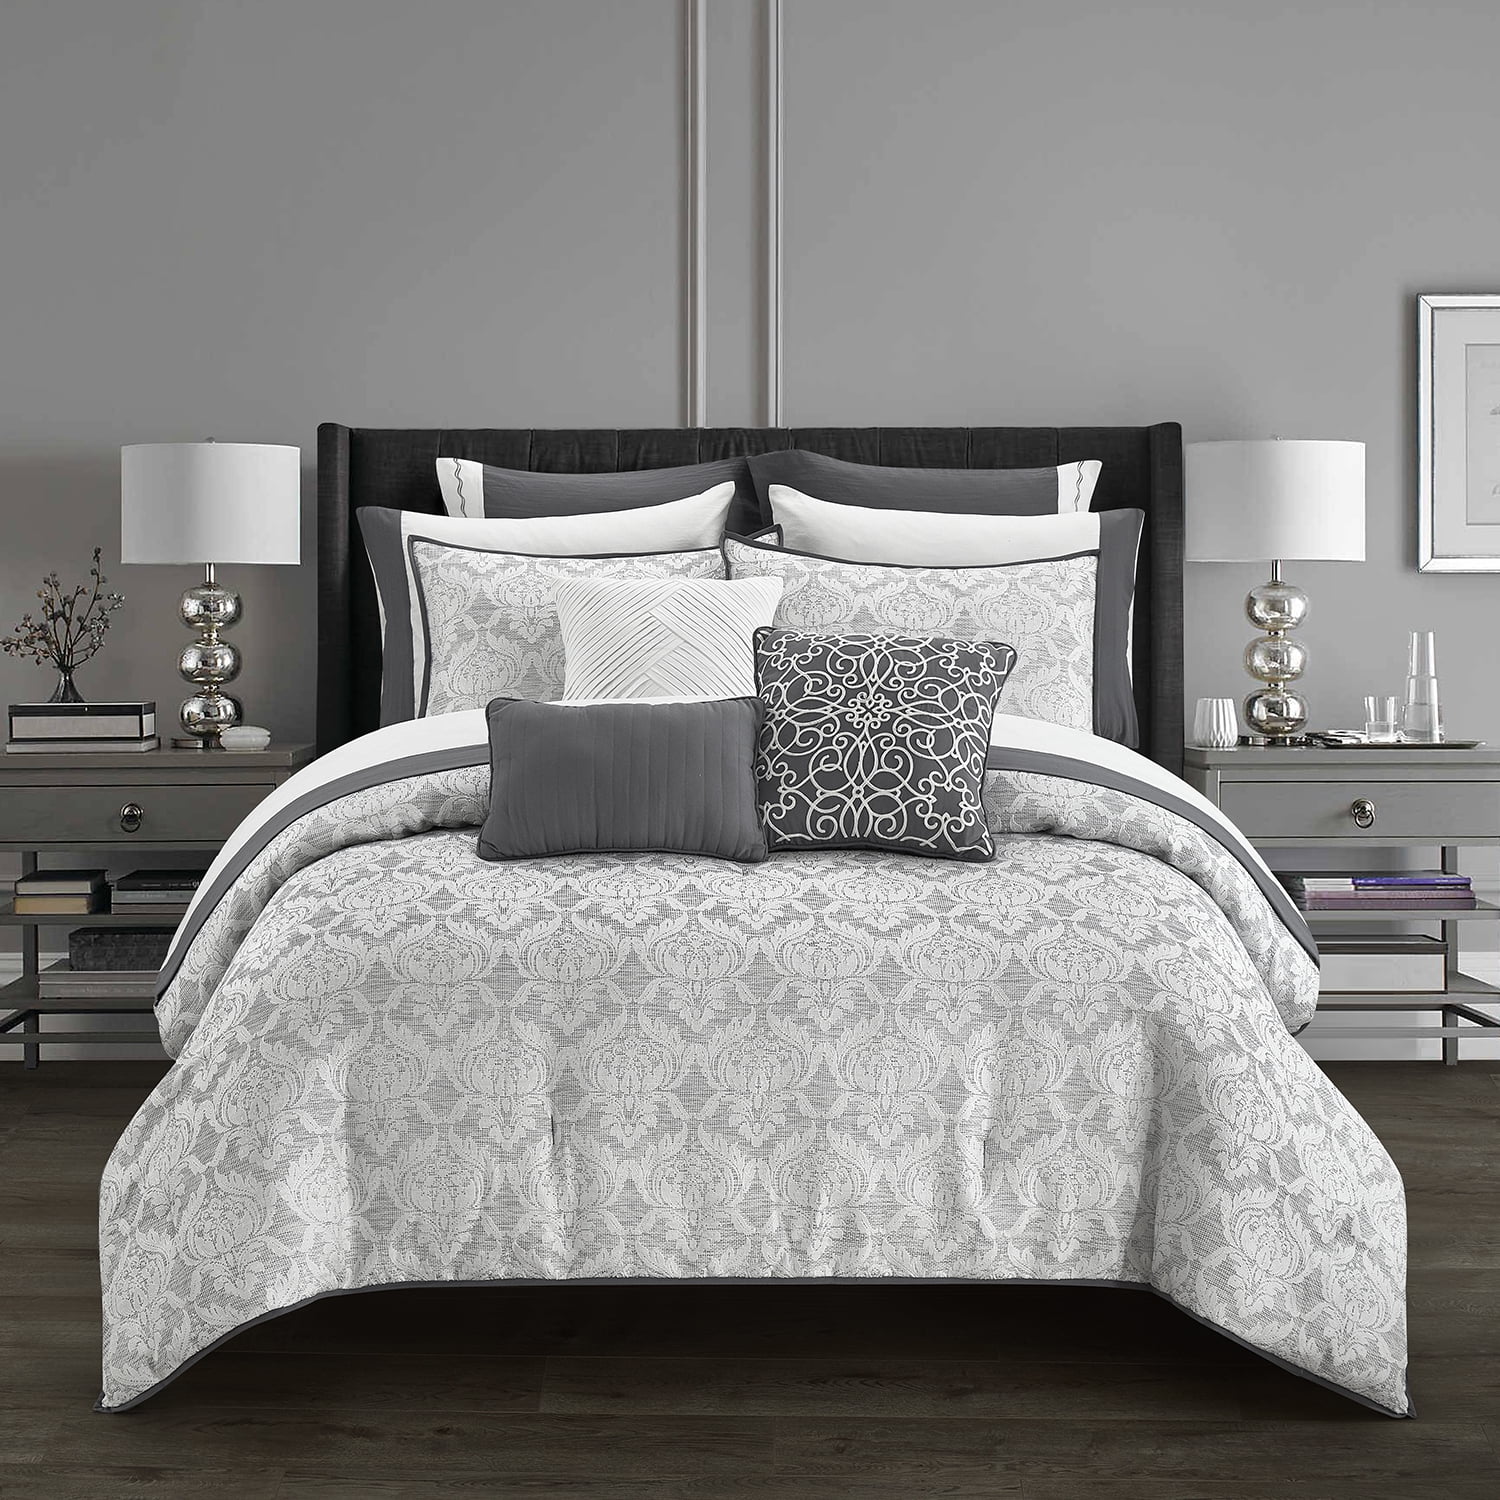 12pc Black/Ivory/Grey Pintuck Striped Comforter & Sheet Set Queen King CKing 